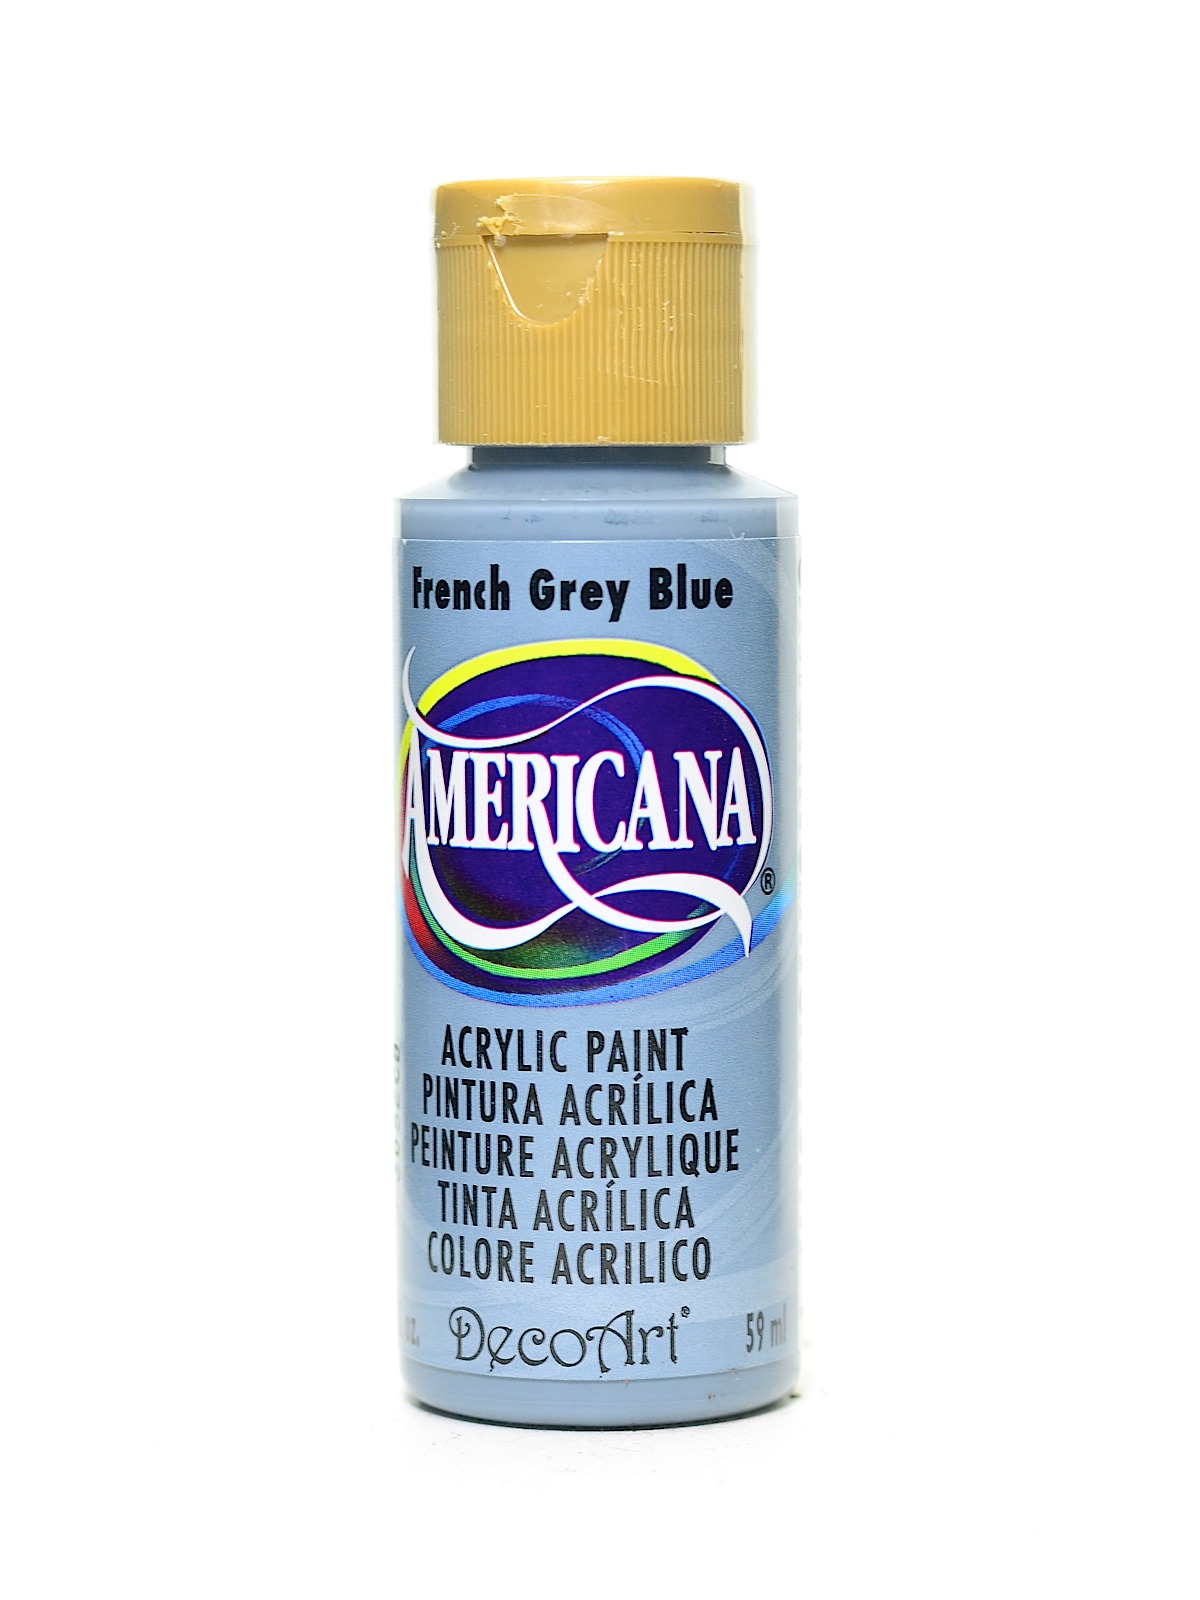 Americana Acrylic Paints French Grey Blue 2 Oz.